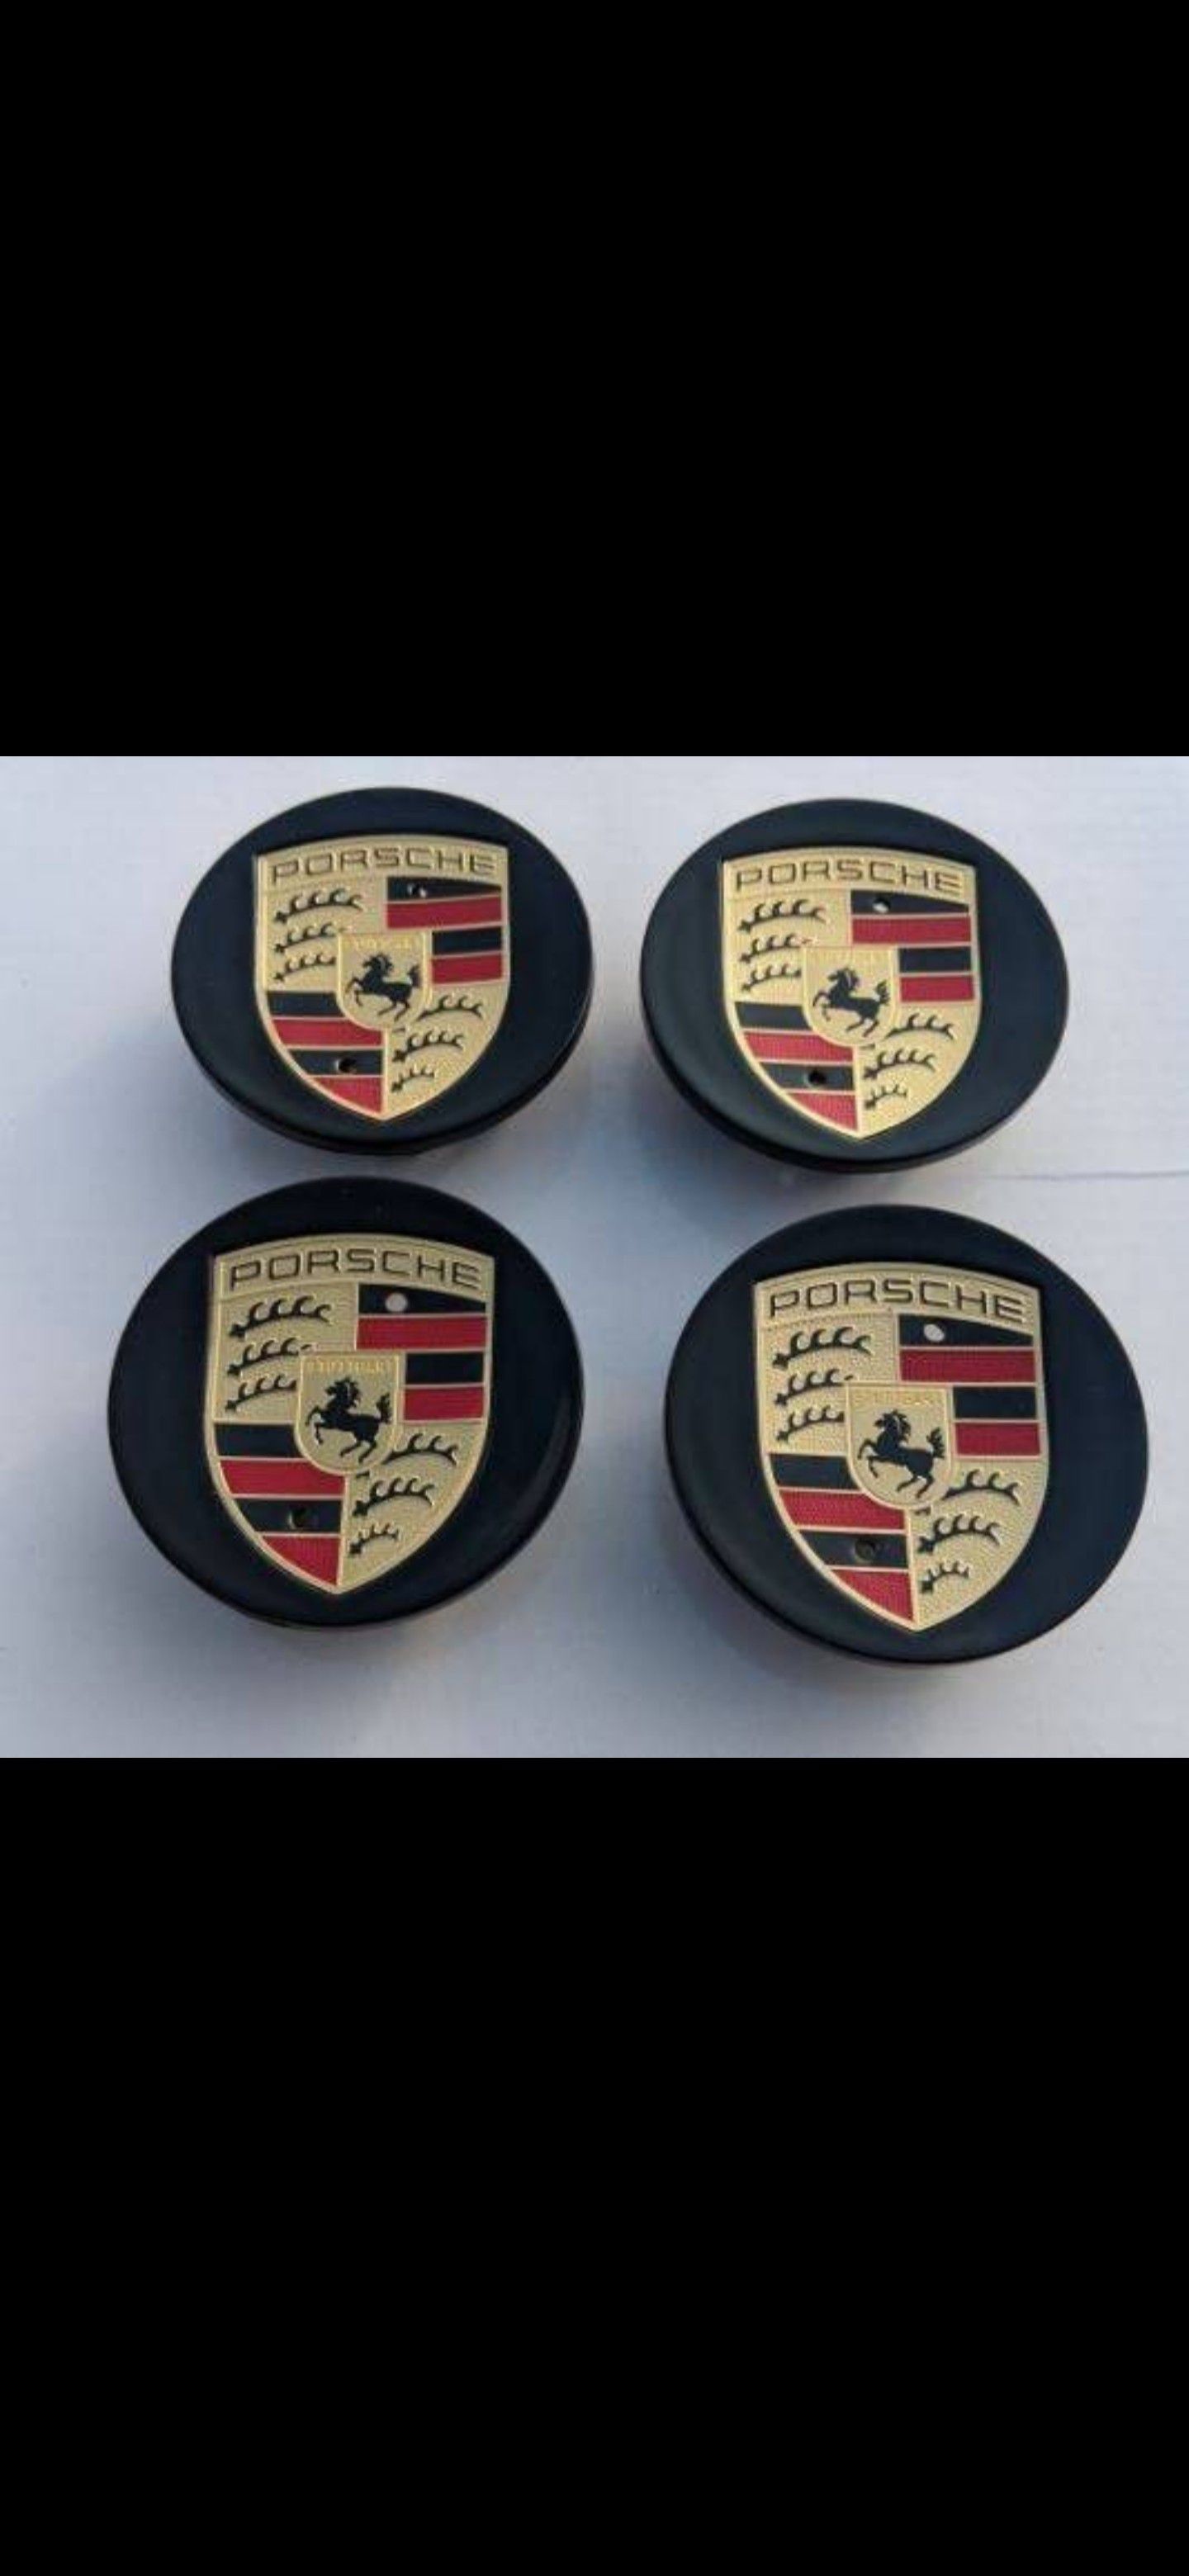 Black Porsche caps wheel rim center Cap 76mm 3 inch diameter BRAND NEW SET OF 4 gloss black color